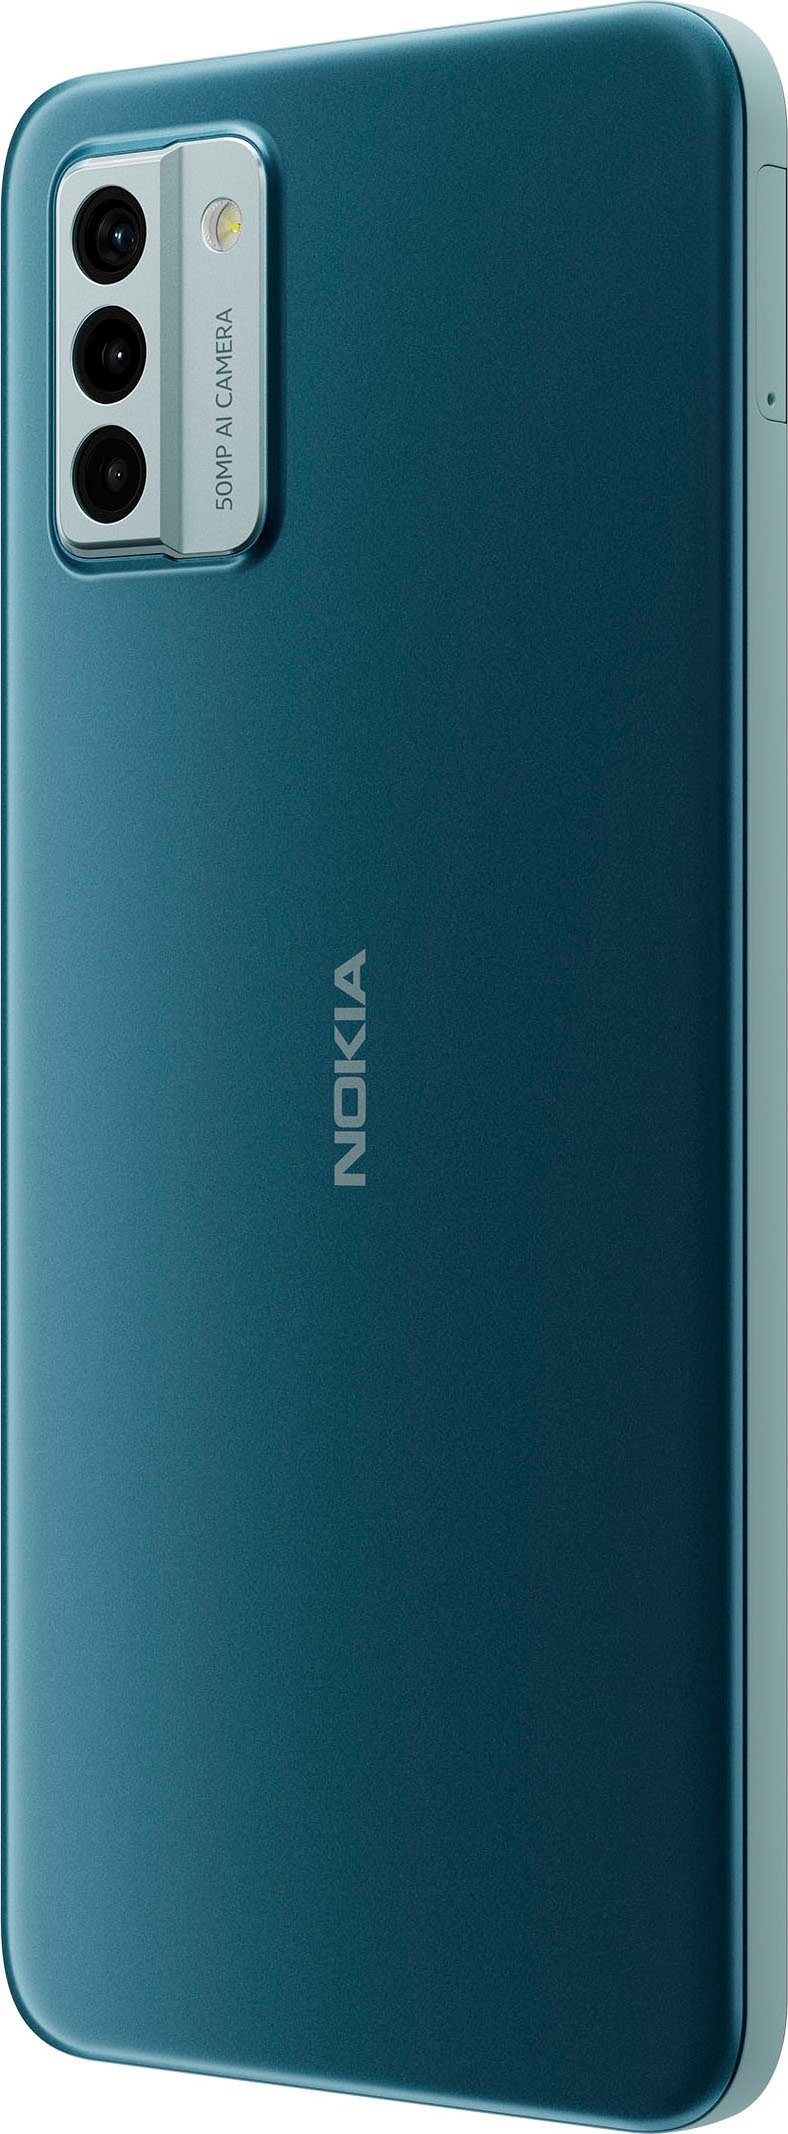 G22 Nokia Lagoon 64 GB Speicherplatz, cm/6,52 (16,56 Zoll, 50 Smartphone MP Blue Kamera)